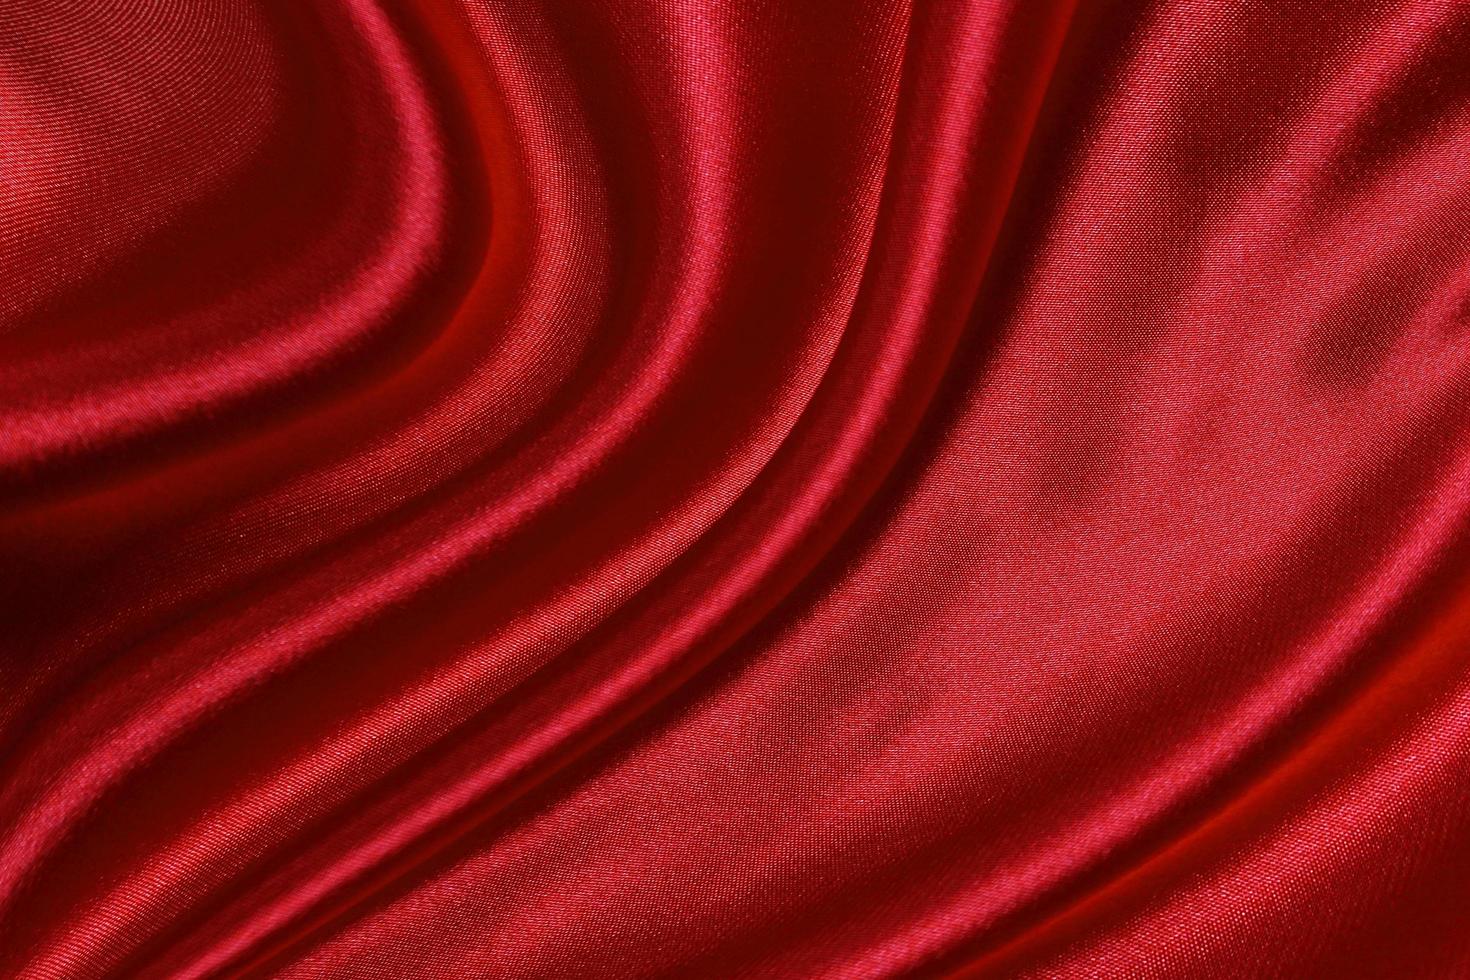 seda vermelha ou textura de tecido de luxo de cetim pode usar como fundo abstrato. vista do topo foto